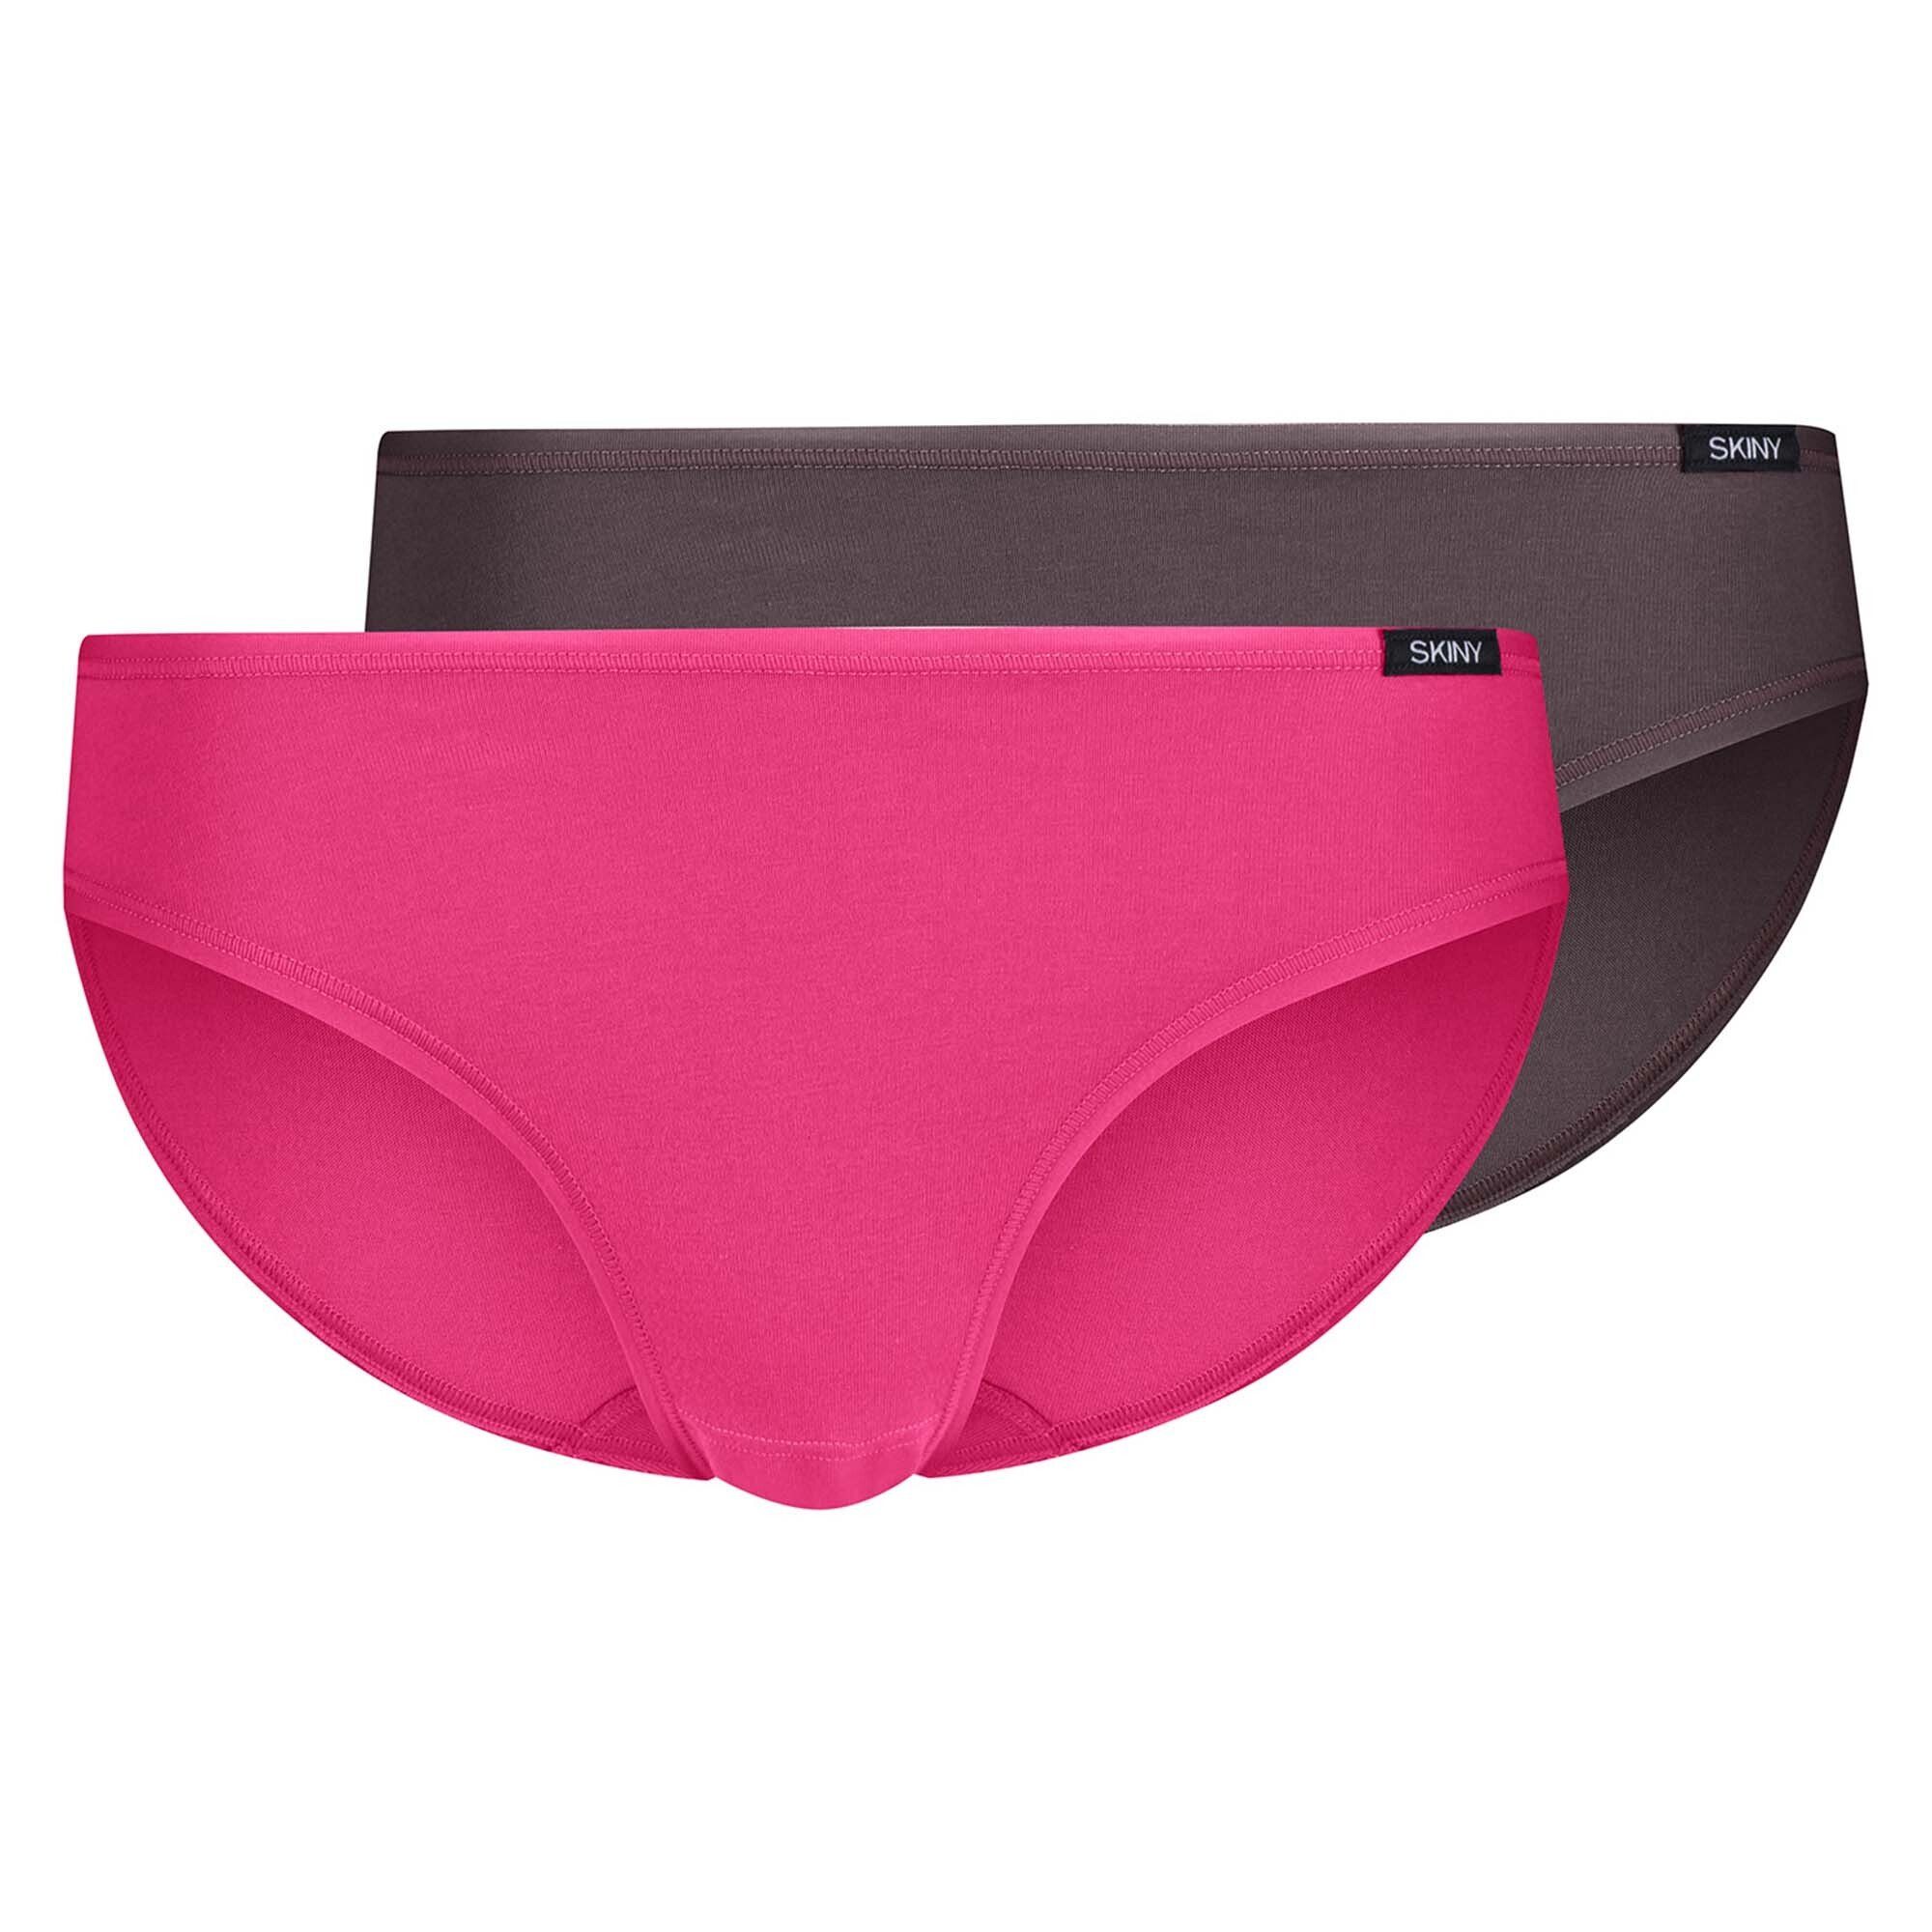 Skiny Slip Damen Rio Slip, Pack Bikini Cotton Slip, 2er - Pink/Taupe